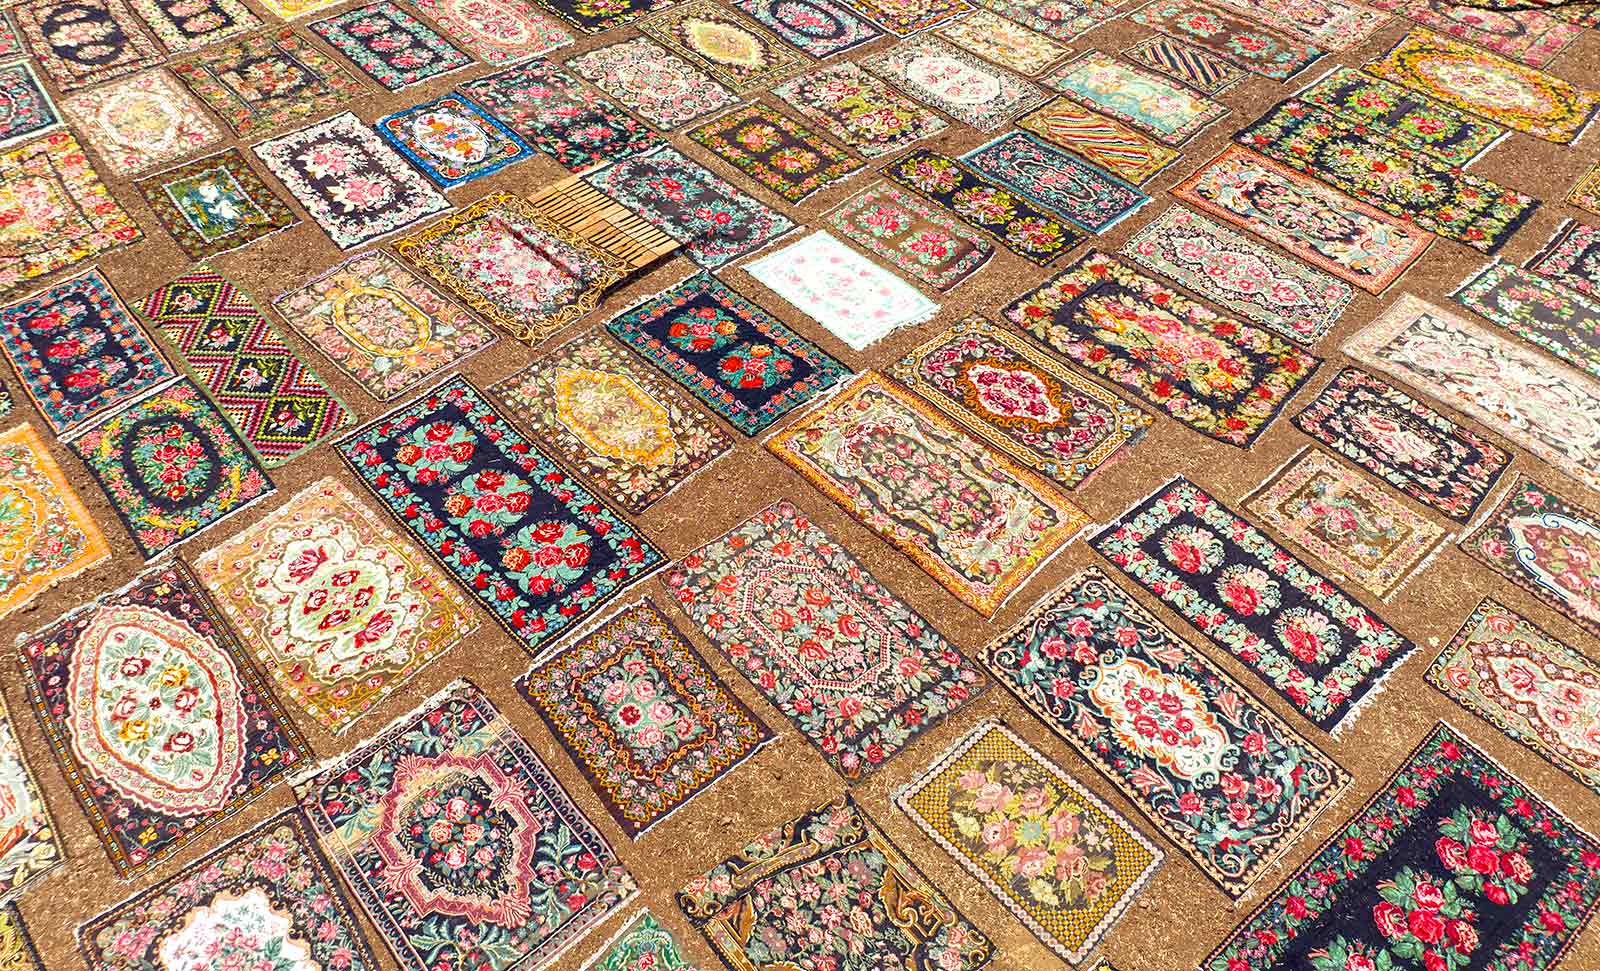 Turkish Carpet Fields in the Summer Season View